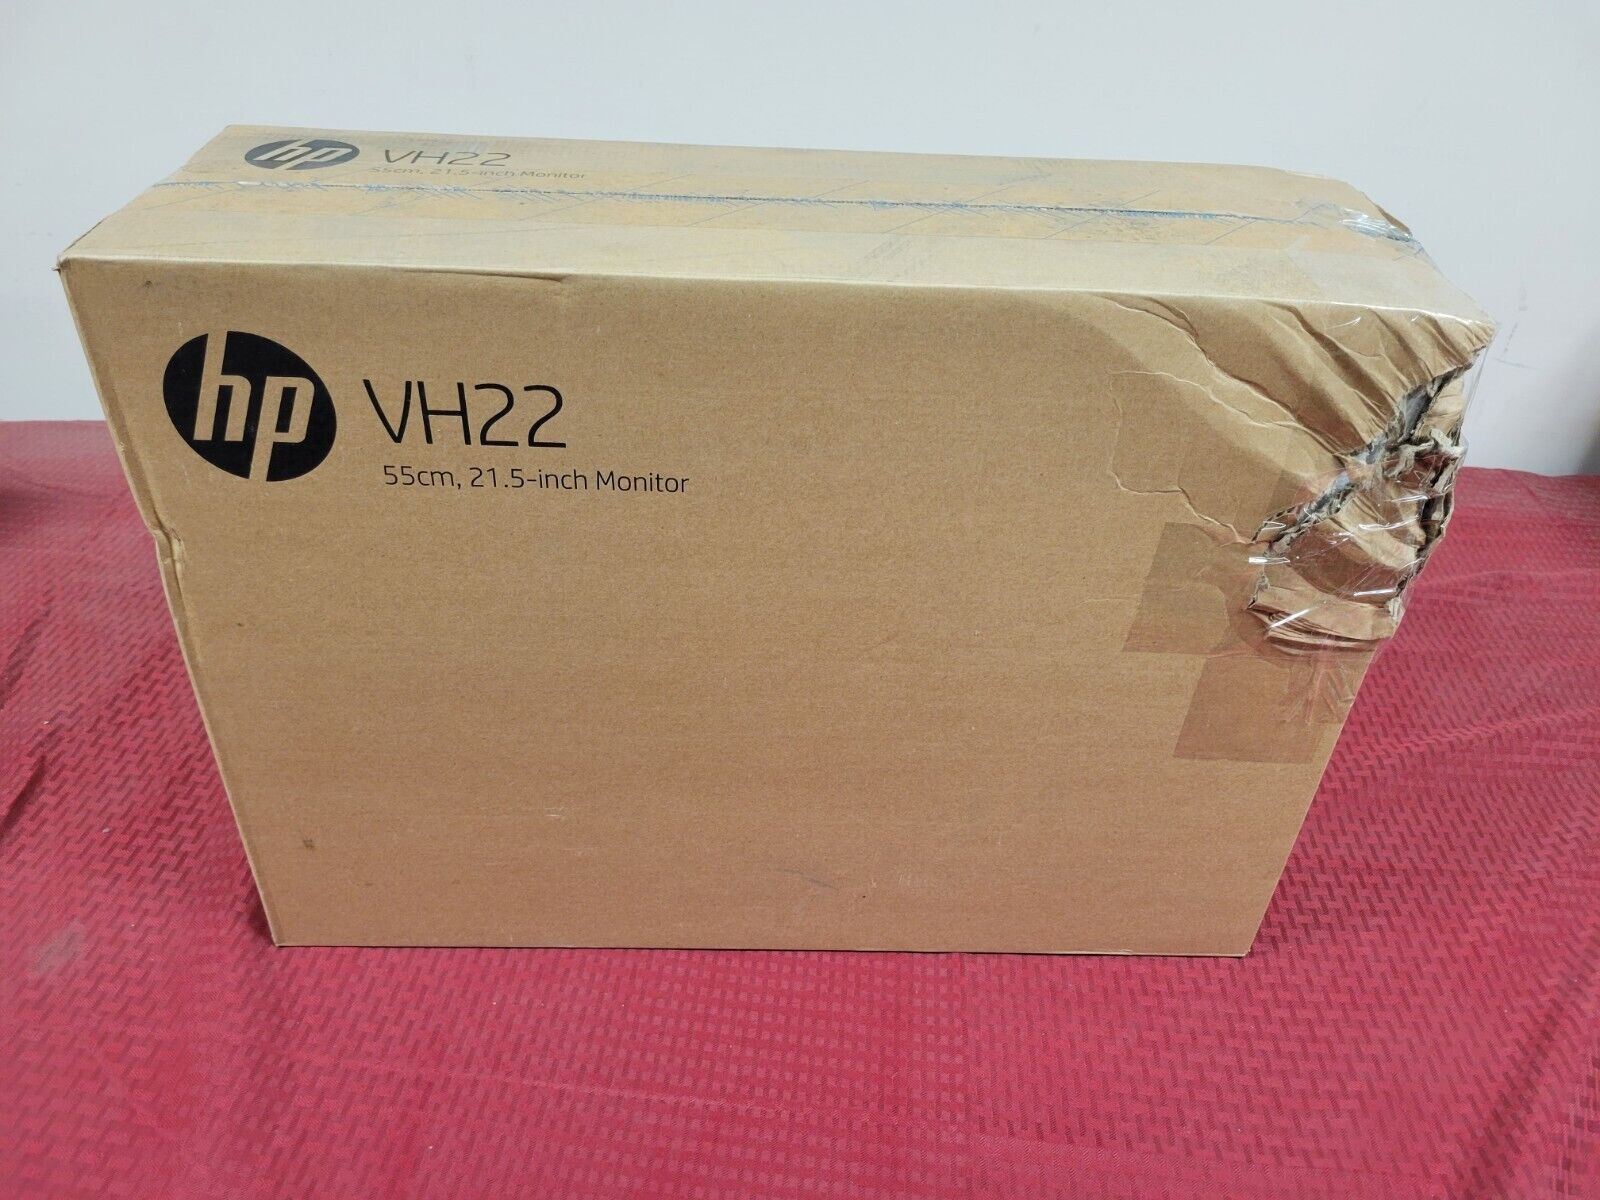 NEW HP VH22 21.5” Monitor HD 1920 x 1080  **DISTRESSED BOX**